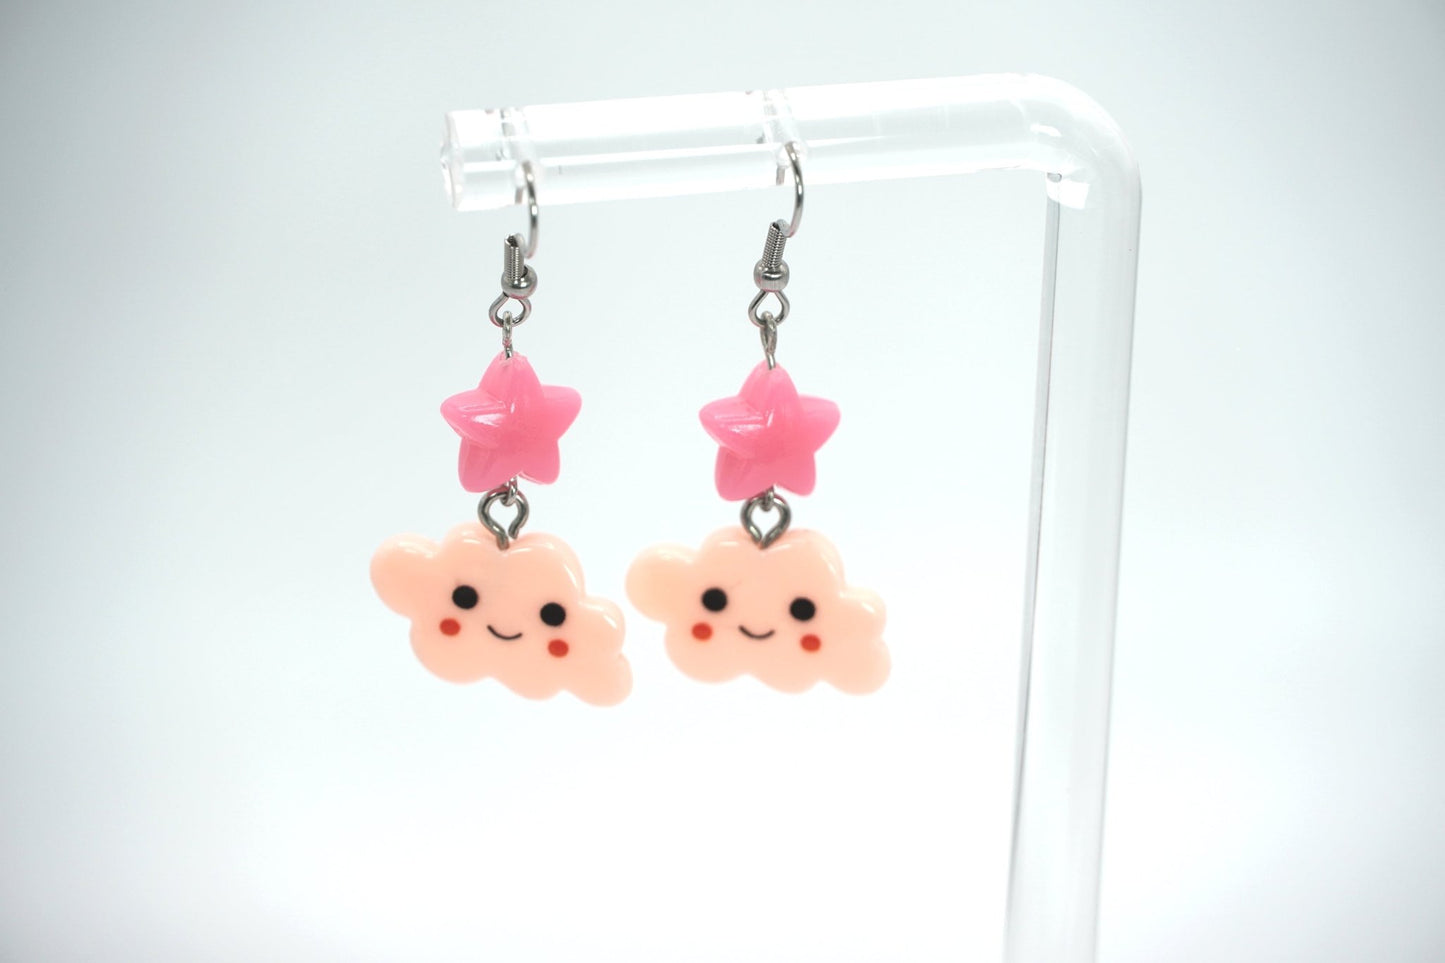 Pink Cloud Star Earrings and Mystery Blind Bag Pair of Earrings - Dekowaii Jewelry Company